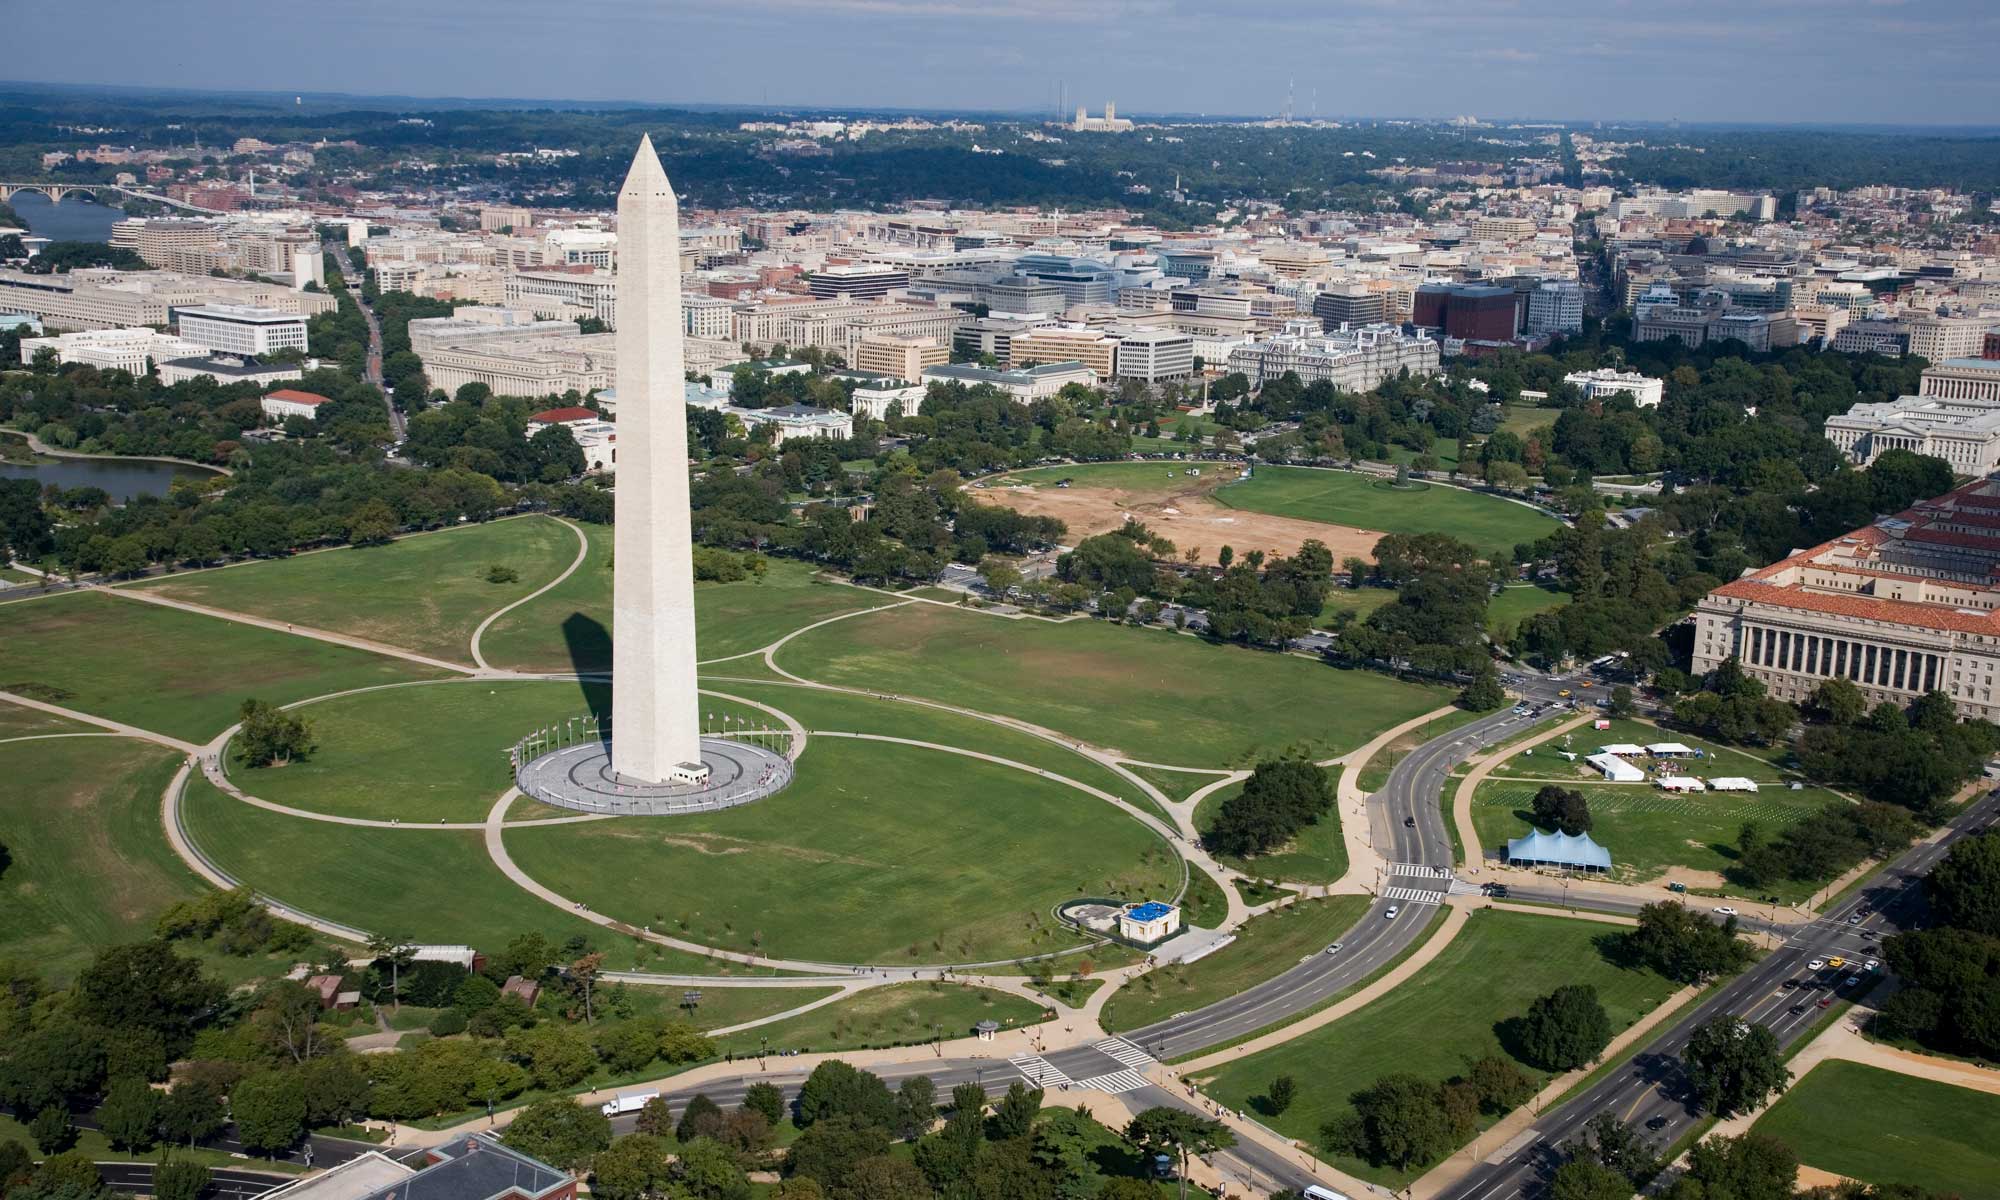 Aerial photograph of the Washington Monument and large surrounding lawns, Washington, D.C.